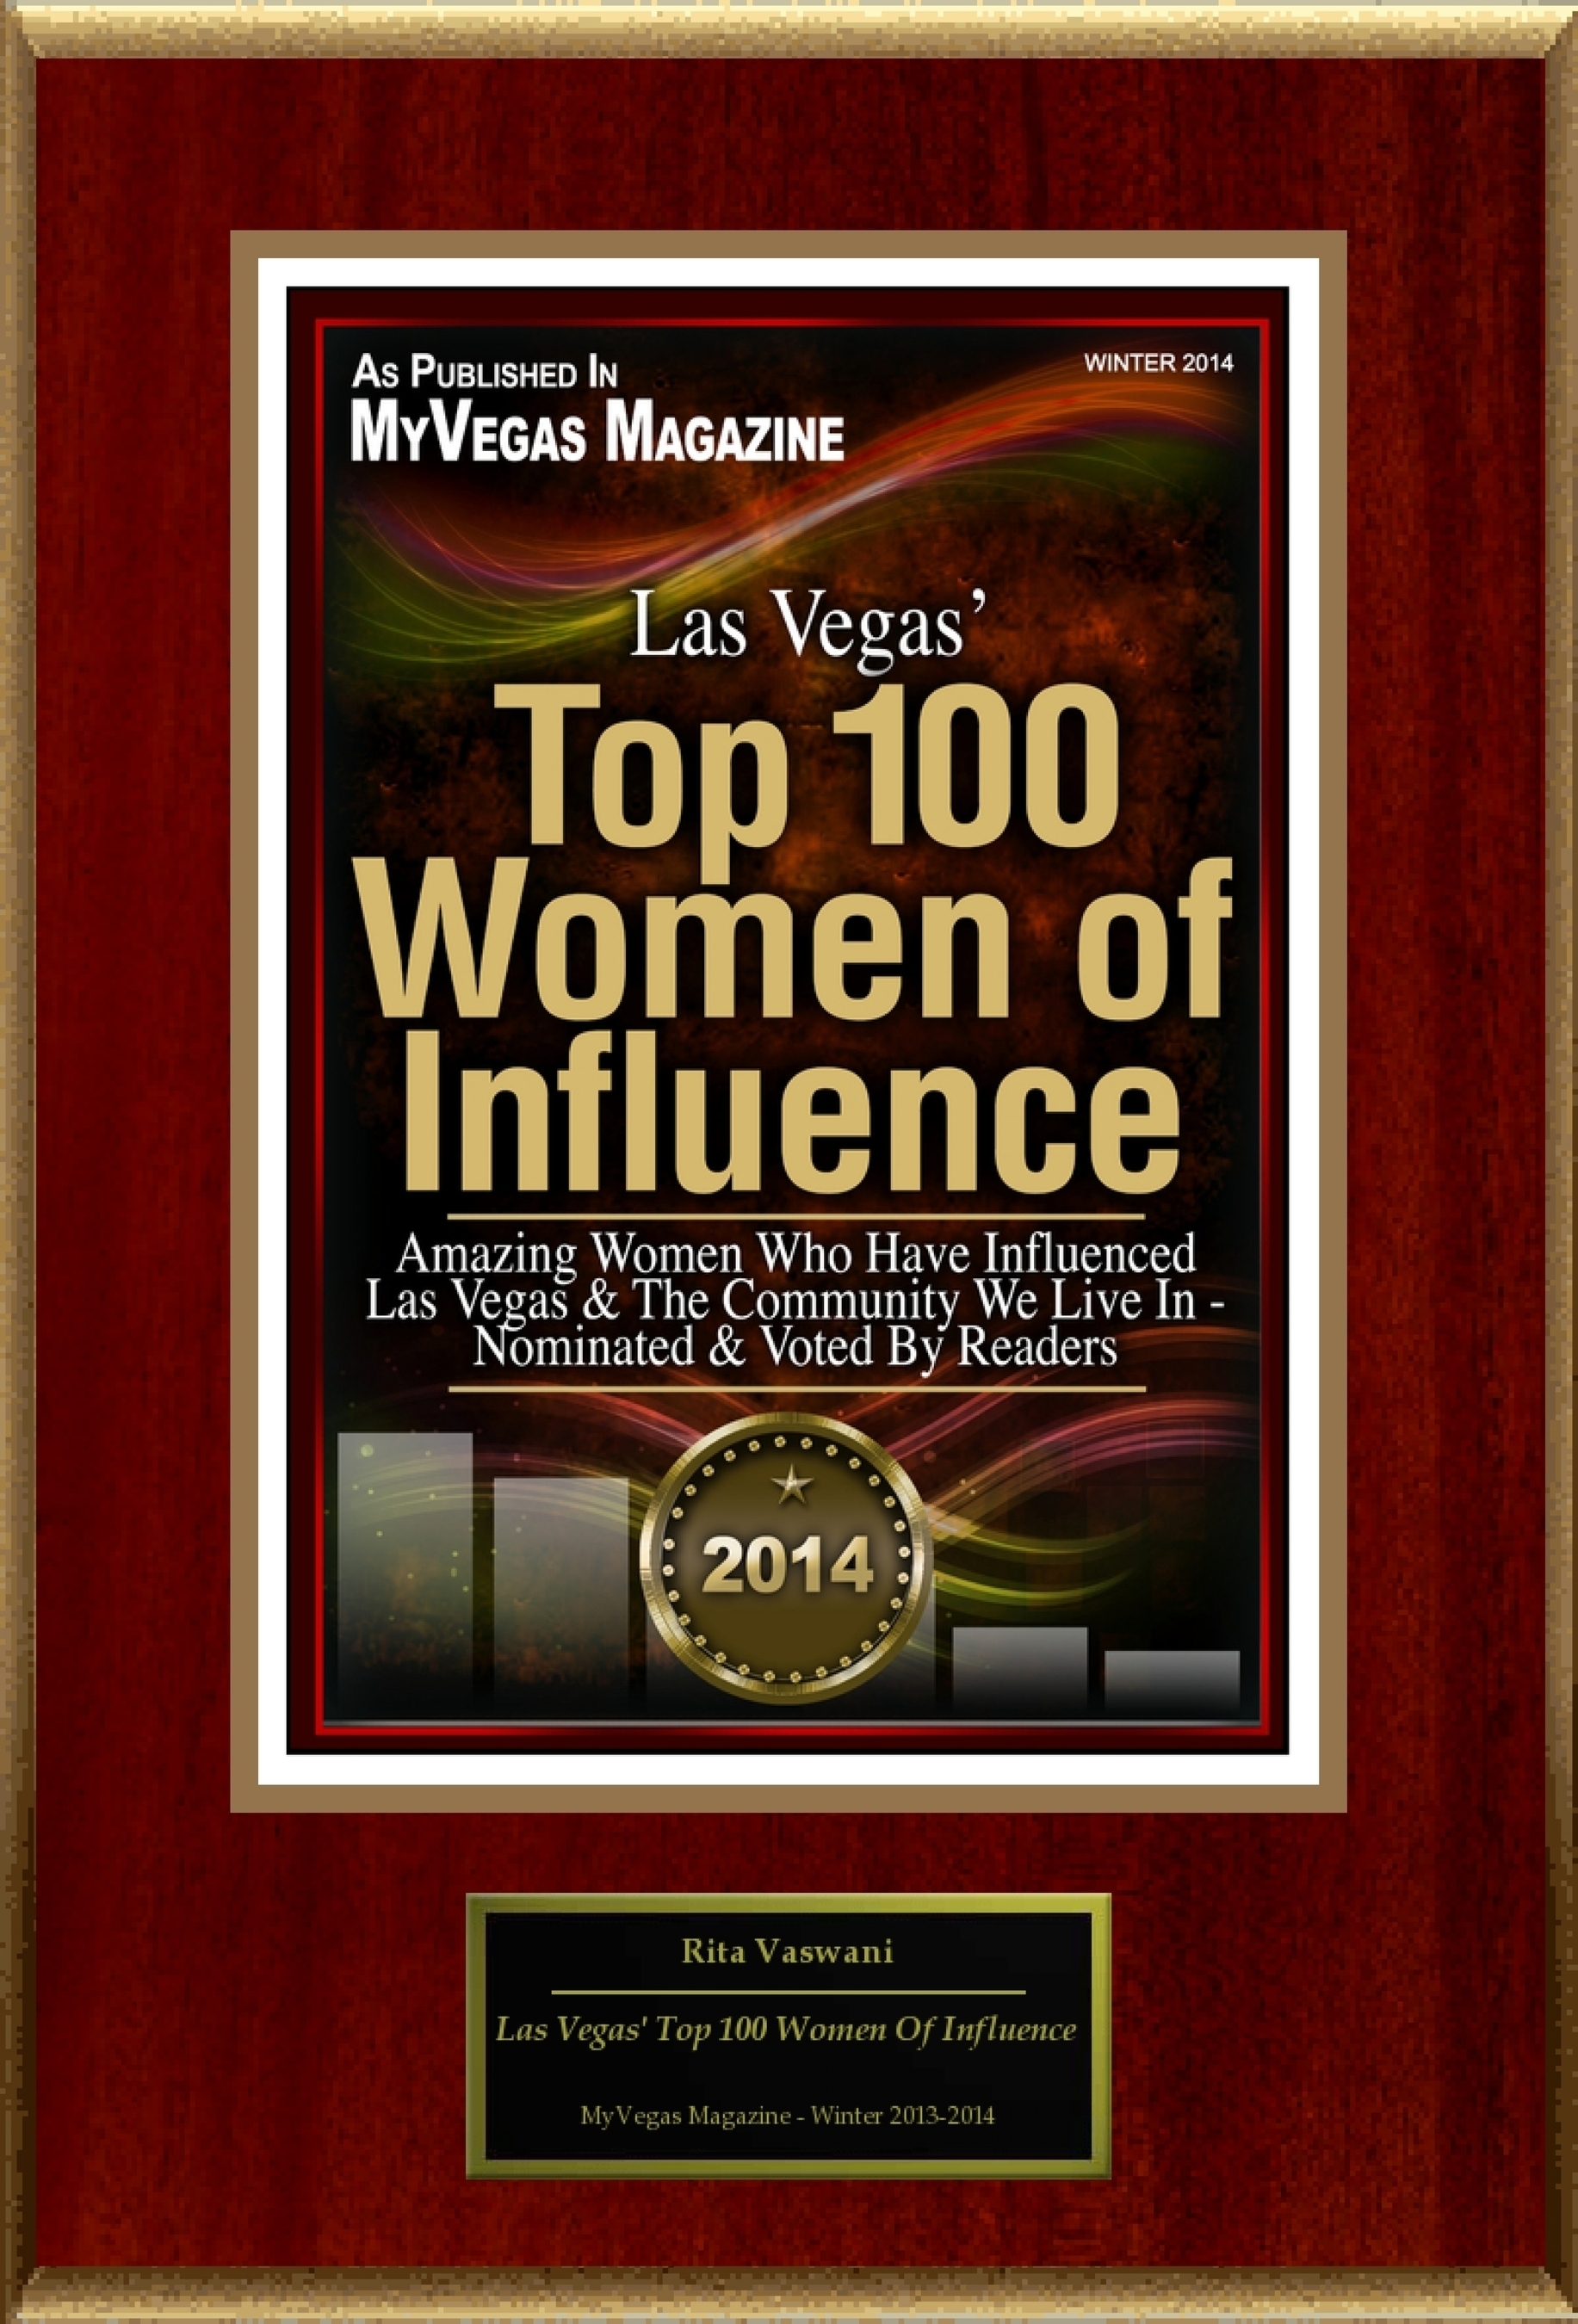 Rita Vaswani Selected For "Las Vegas' Top 100 Women Of Influence" (PRNewsFoto/American Registry)